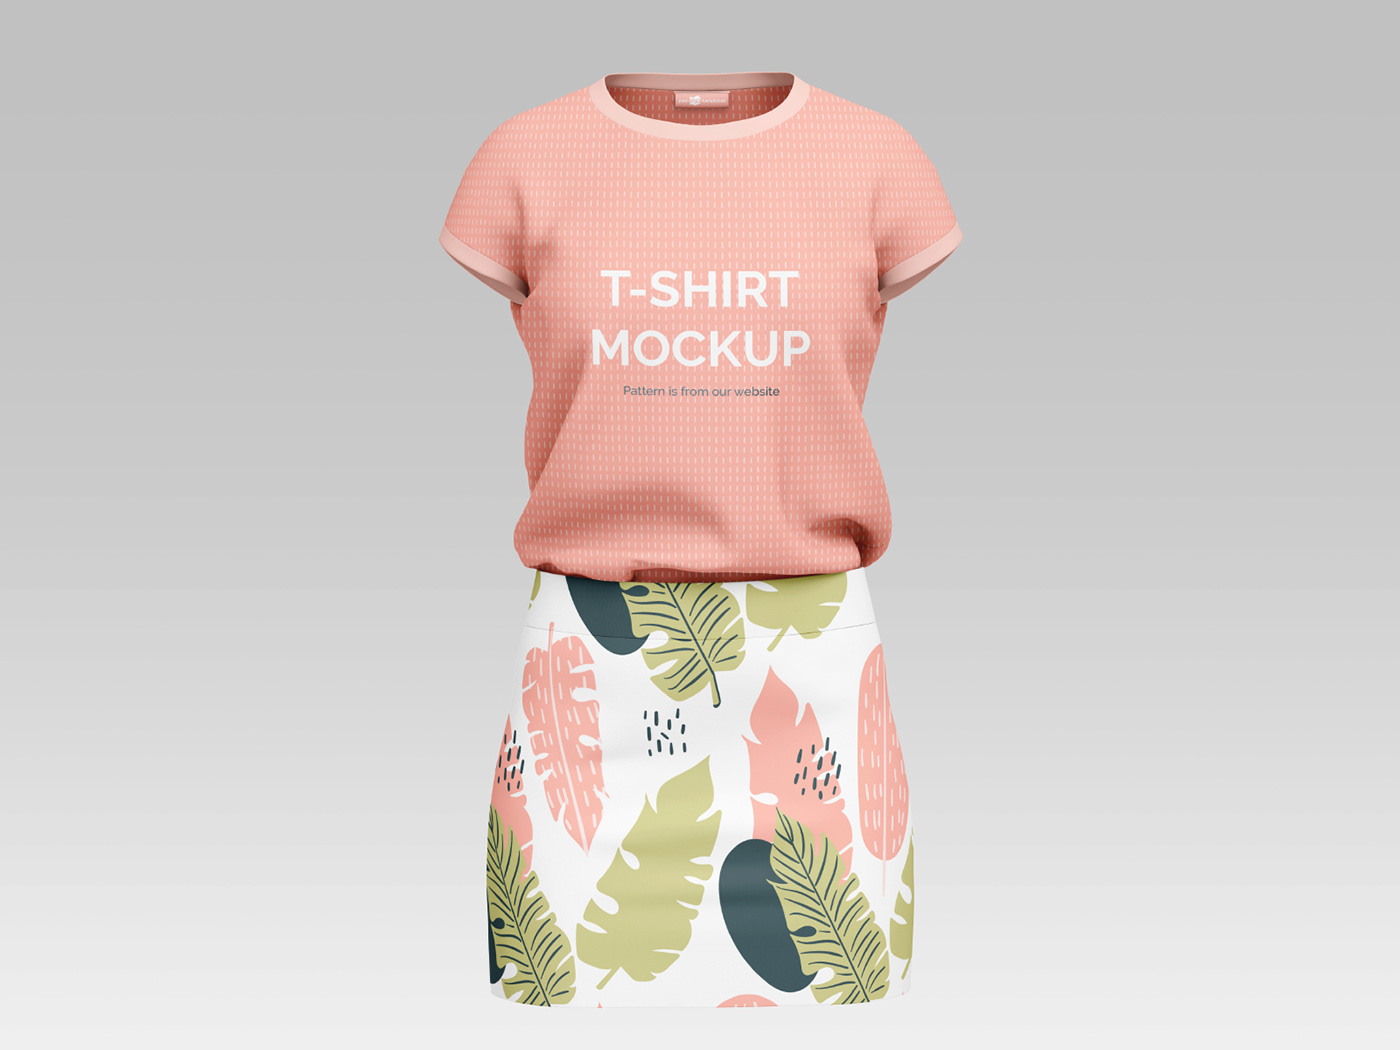 free Mockup psd skirt t-shirt tshirt mockup